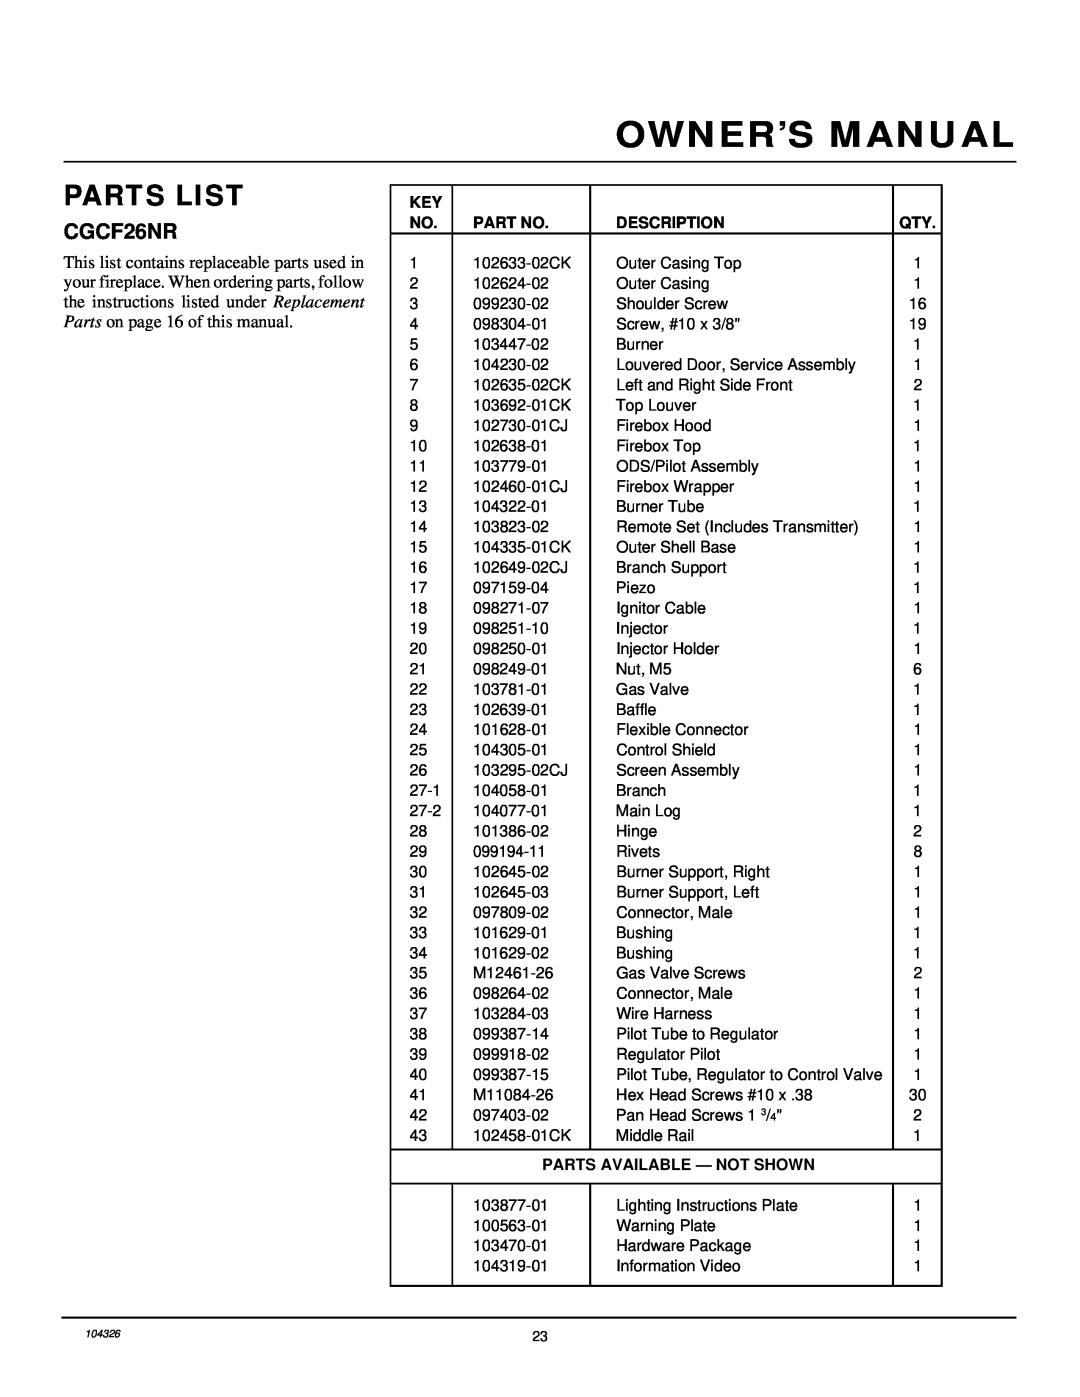 Desa CGCF26NR installation manual Parts List, Description, Parts Available - Not Shown 